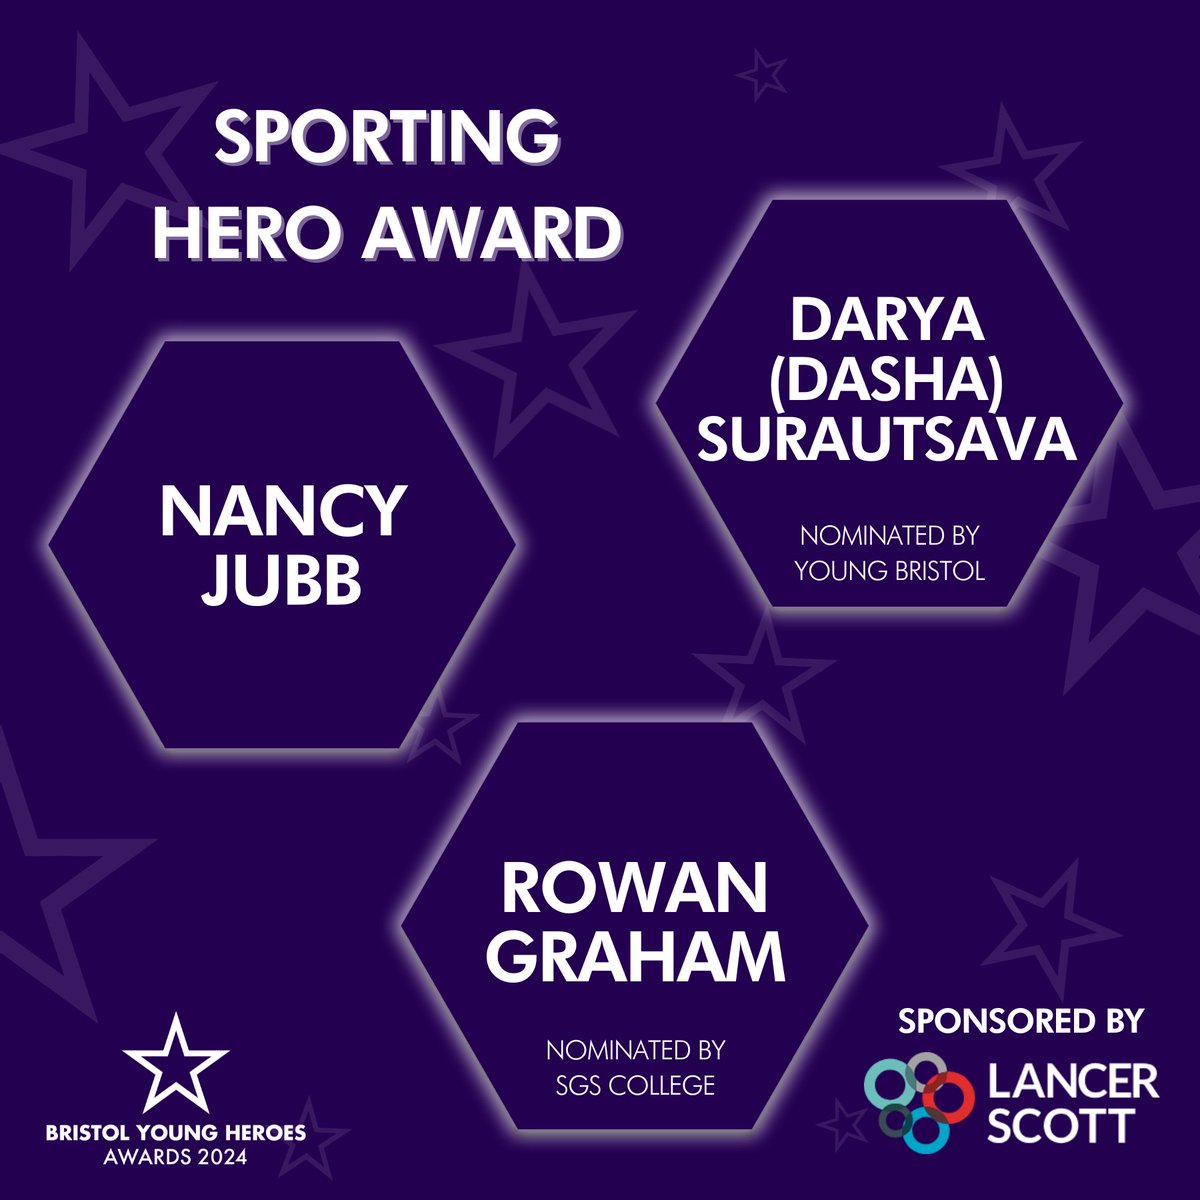 ✨Sporting Hero Award✨ Congratulations to the finalists for the Sporting Hero Award for the Bristol Young Hero Awards 2024! 🌟 Nancy Jubb 🌟 Darya (Dasha) Surautsava 🌟 Rowan Graham Good luck 🤞 Thank you to @LancerScottLtd for sponsoring the Sporting Hero Award 🙏